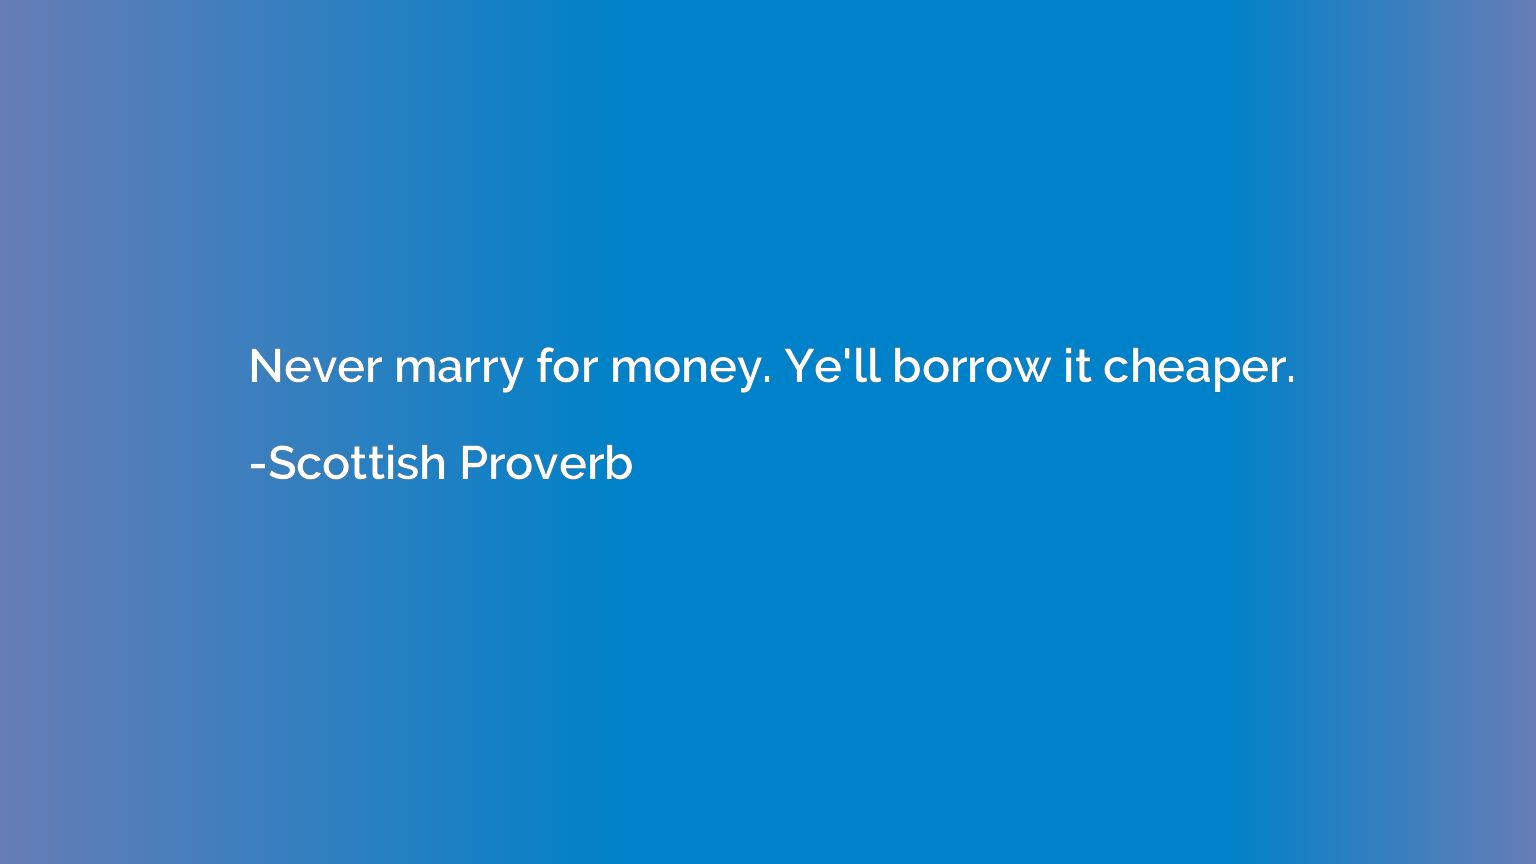 Never marry for money. Ye'll borrow it cheaper.